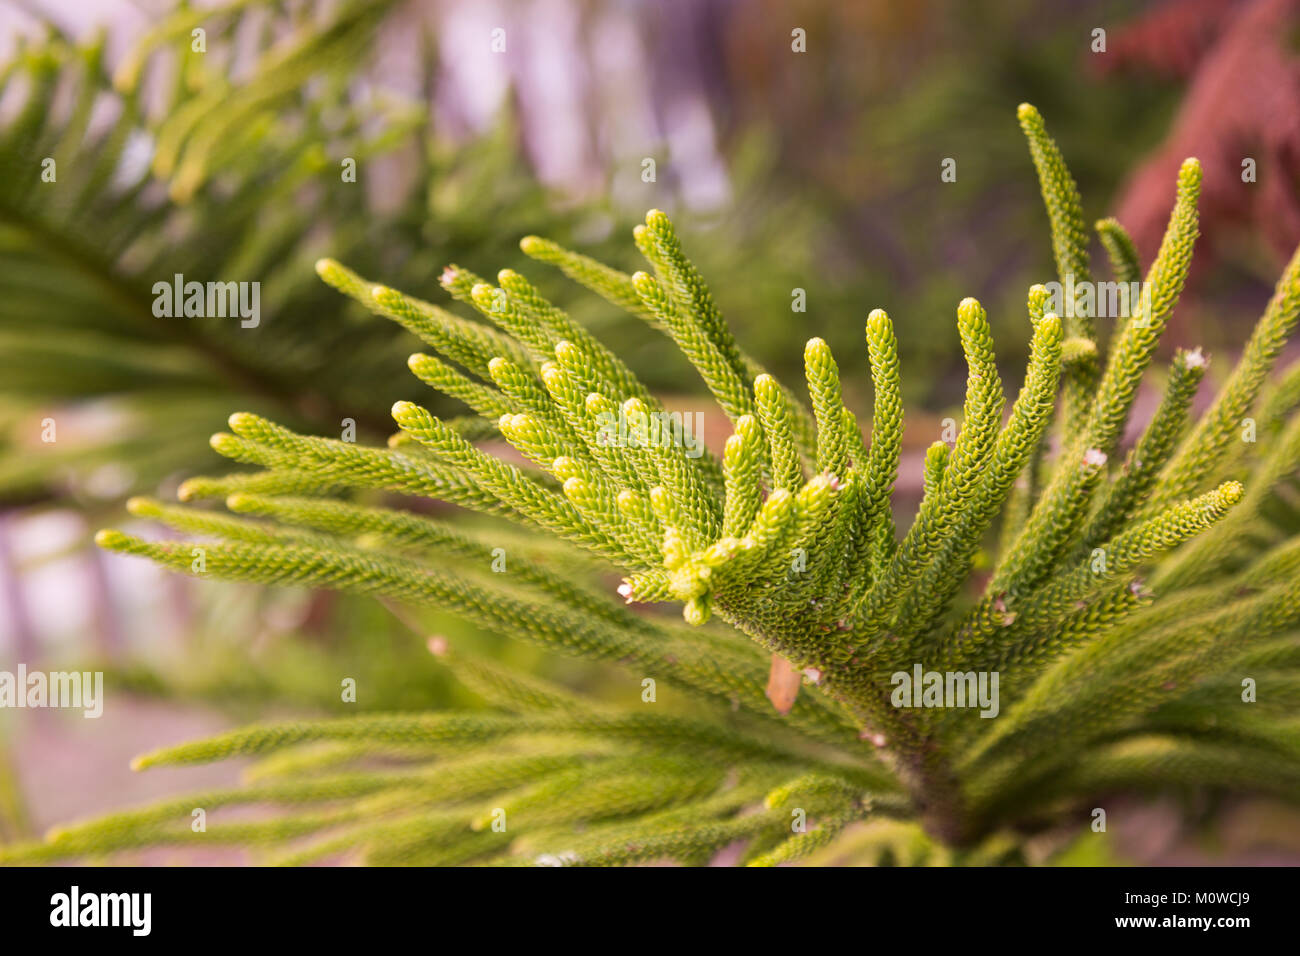 evergreen australian araucaria heterophylla norfolk island pine close-up Stock Photo